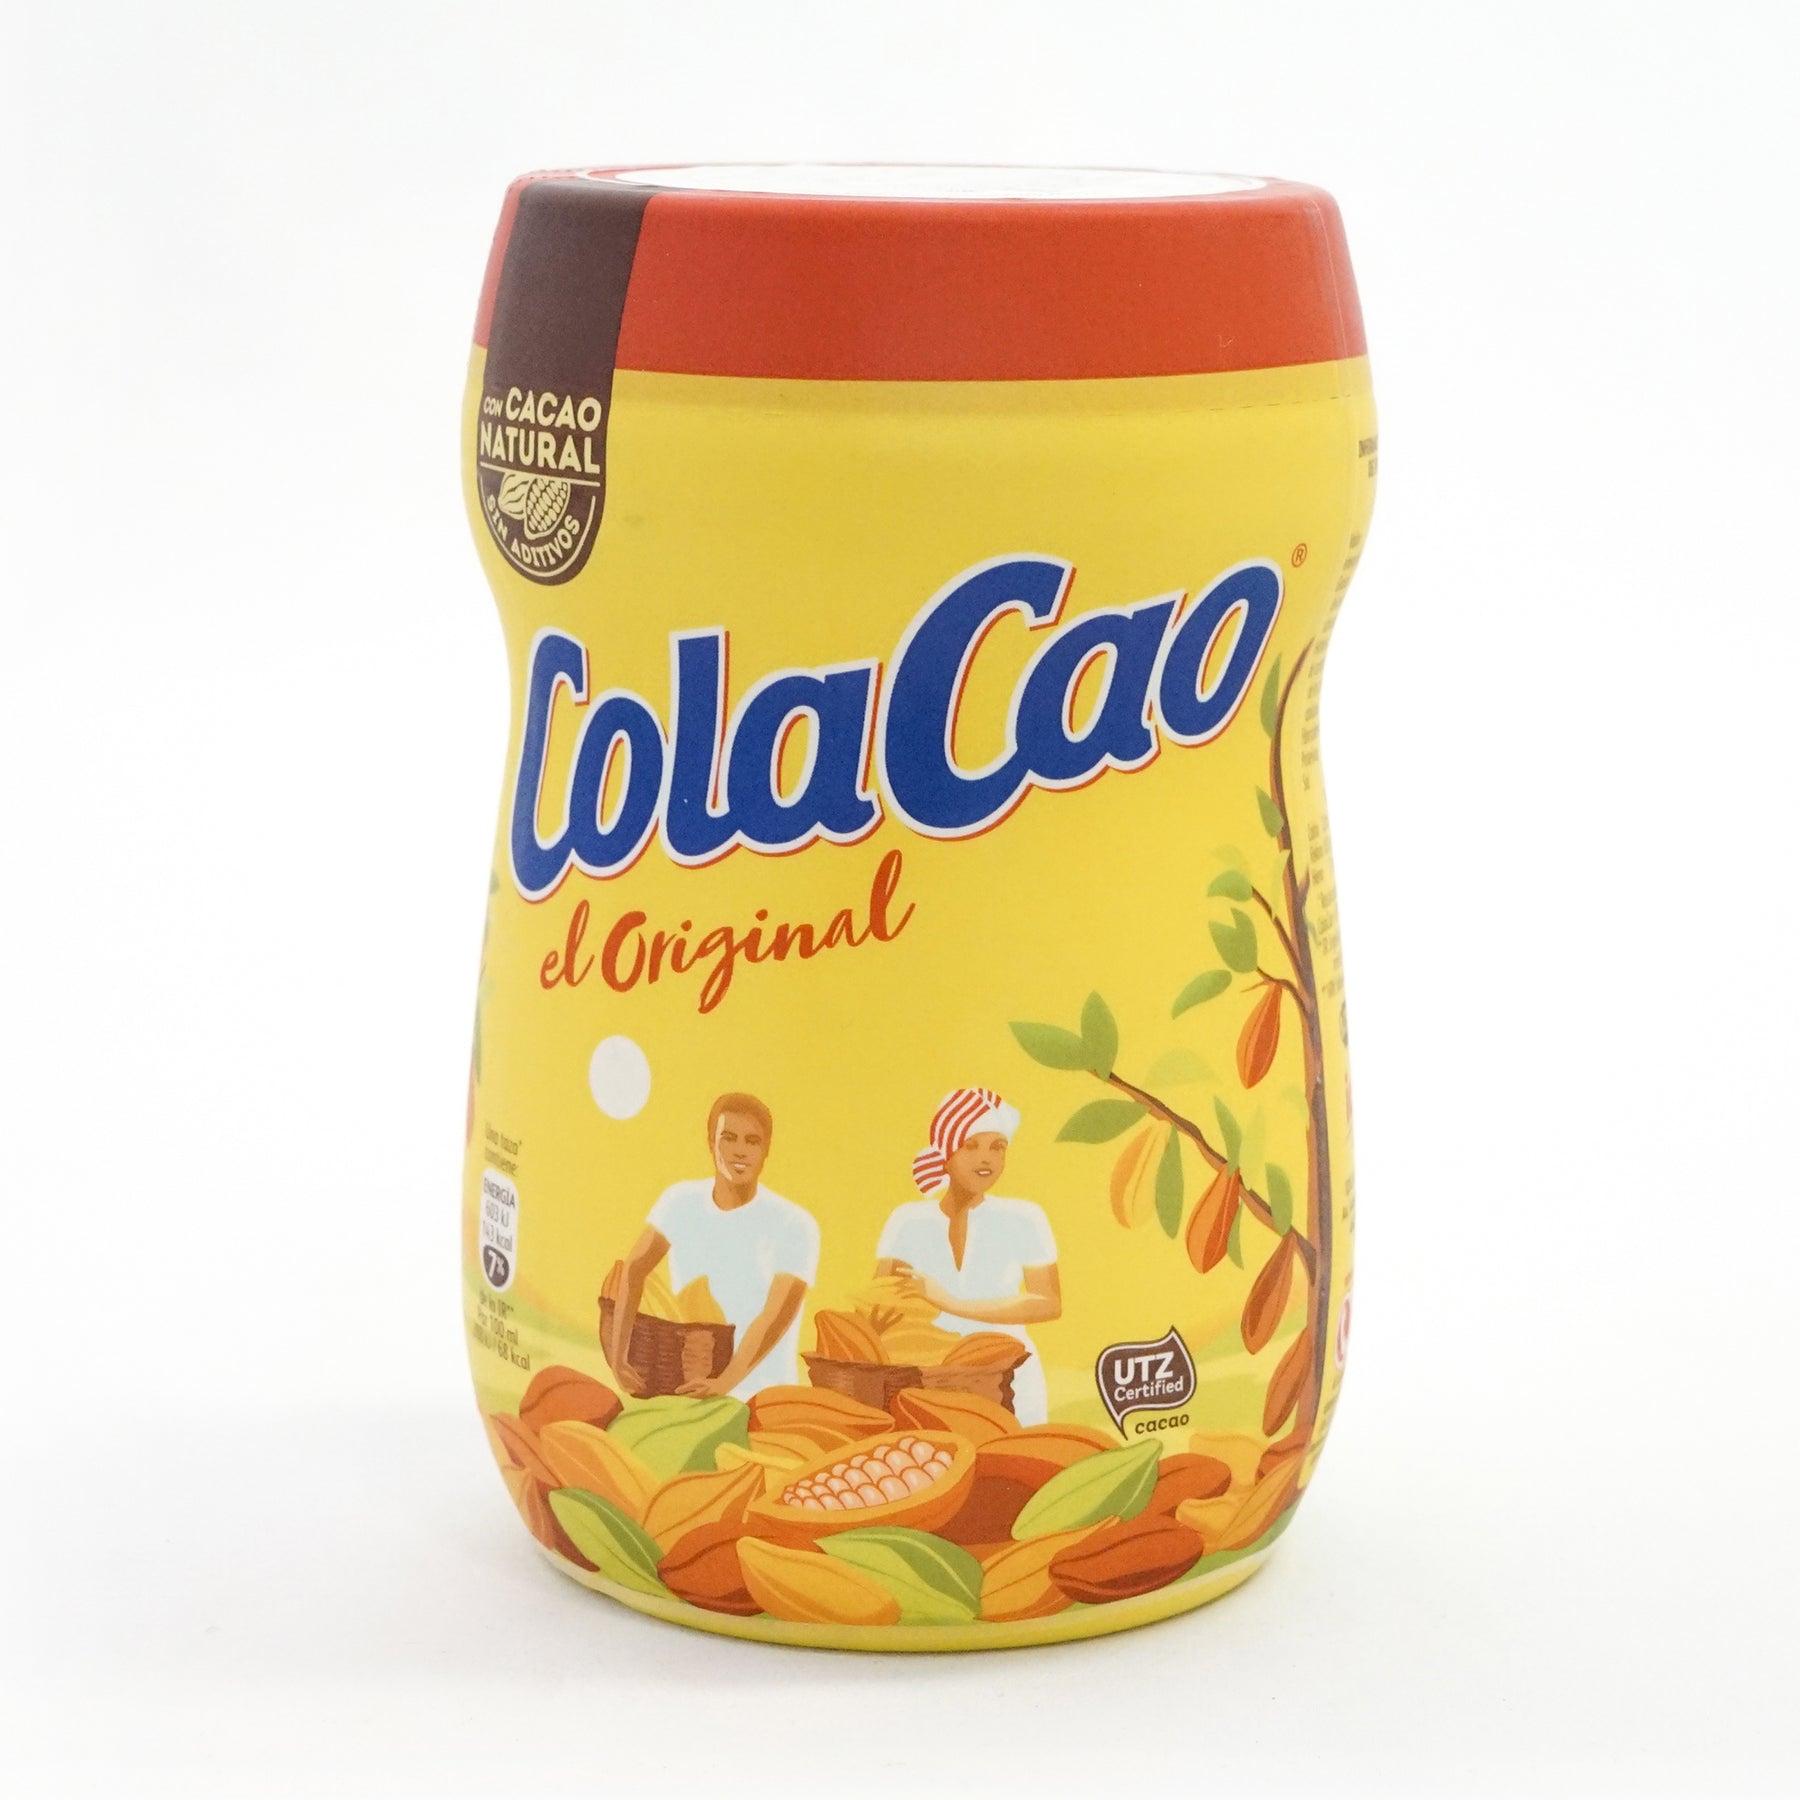 Cocoa powder COLA CAO ORIGINAL CASE 50 ENVELOPES 10 Gr. x 50 Un.